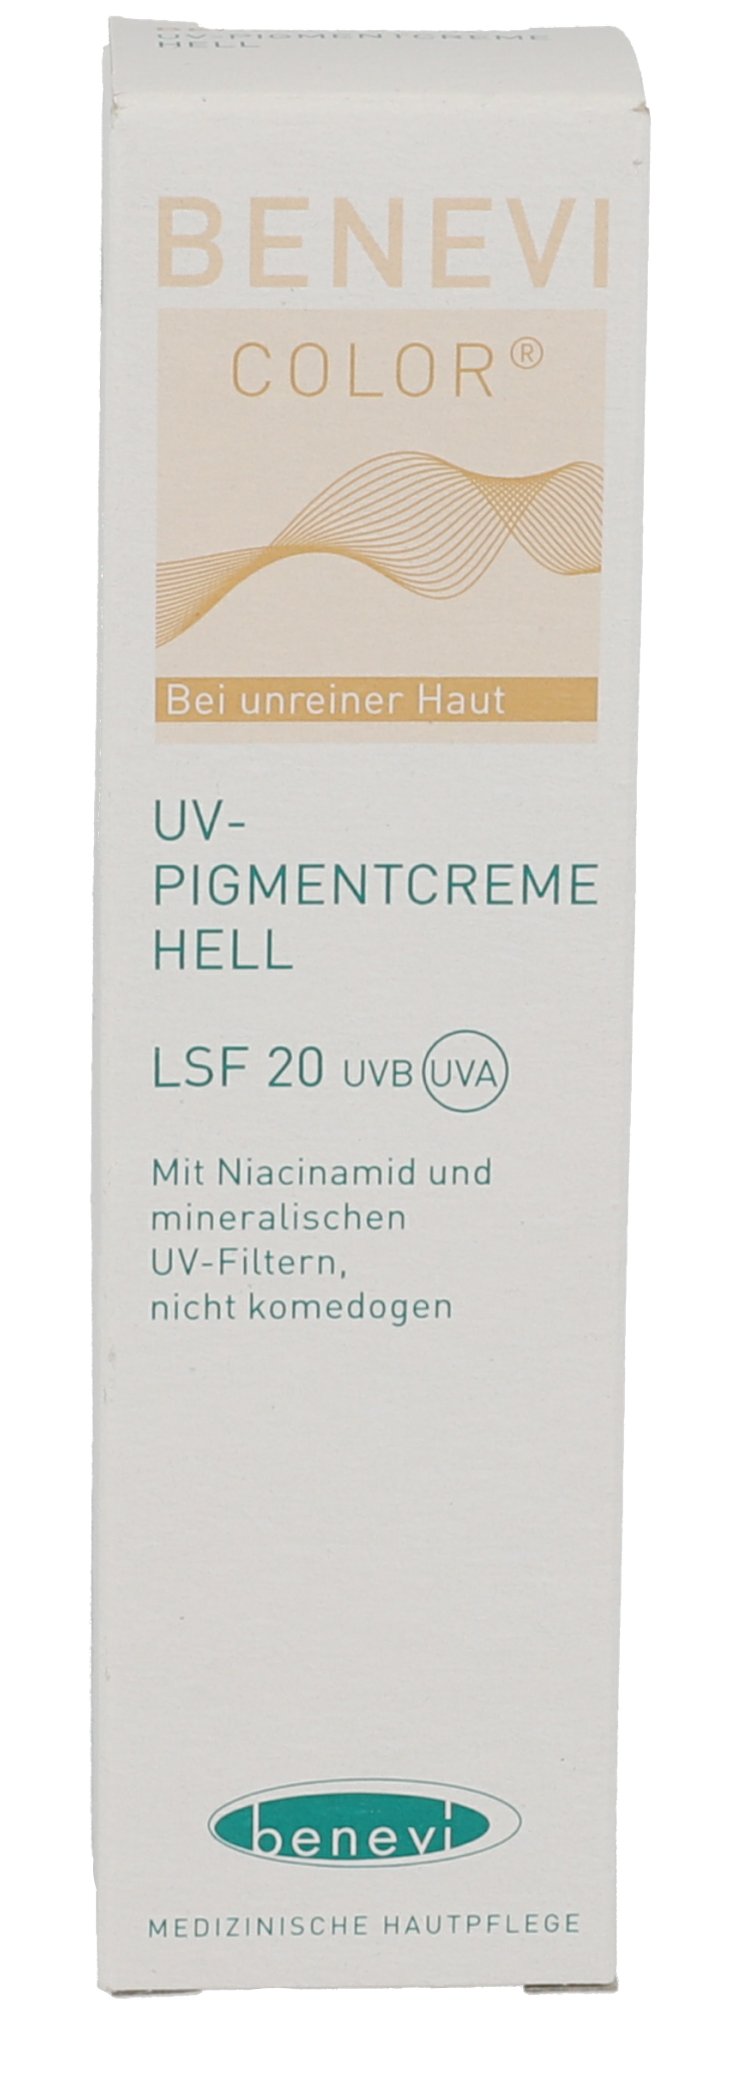 BENEVI Color UV-Pigmentcreme hell LSF 20